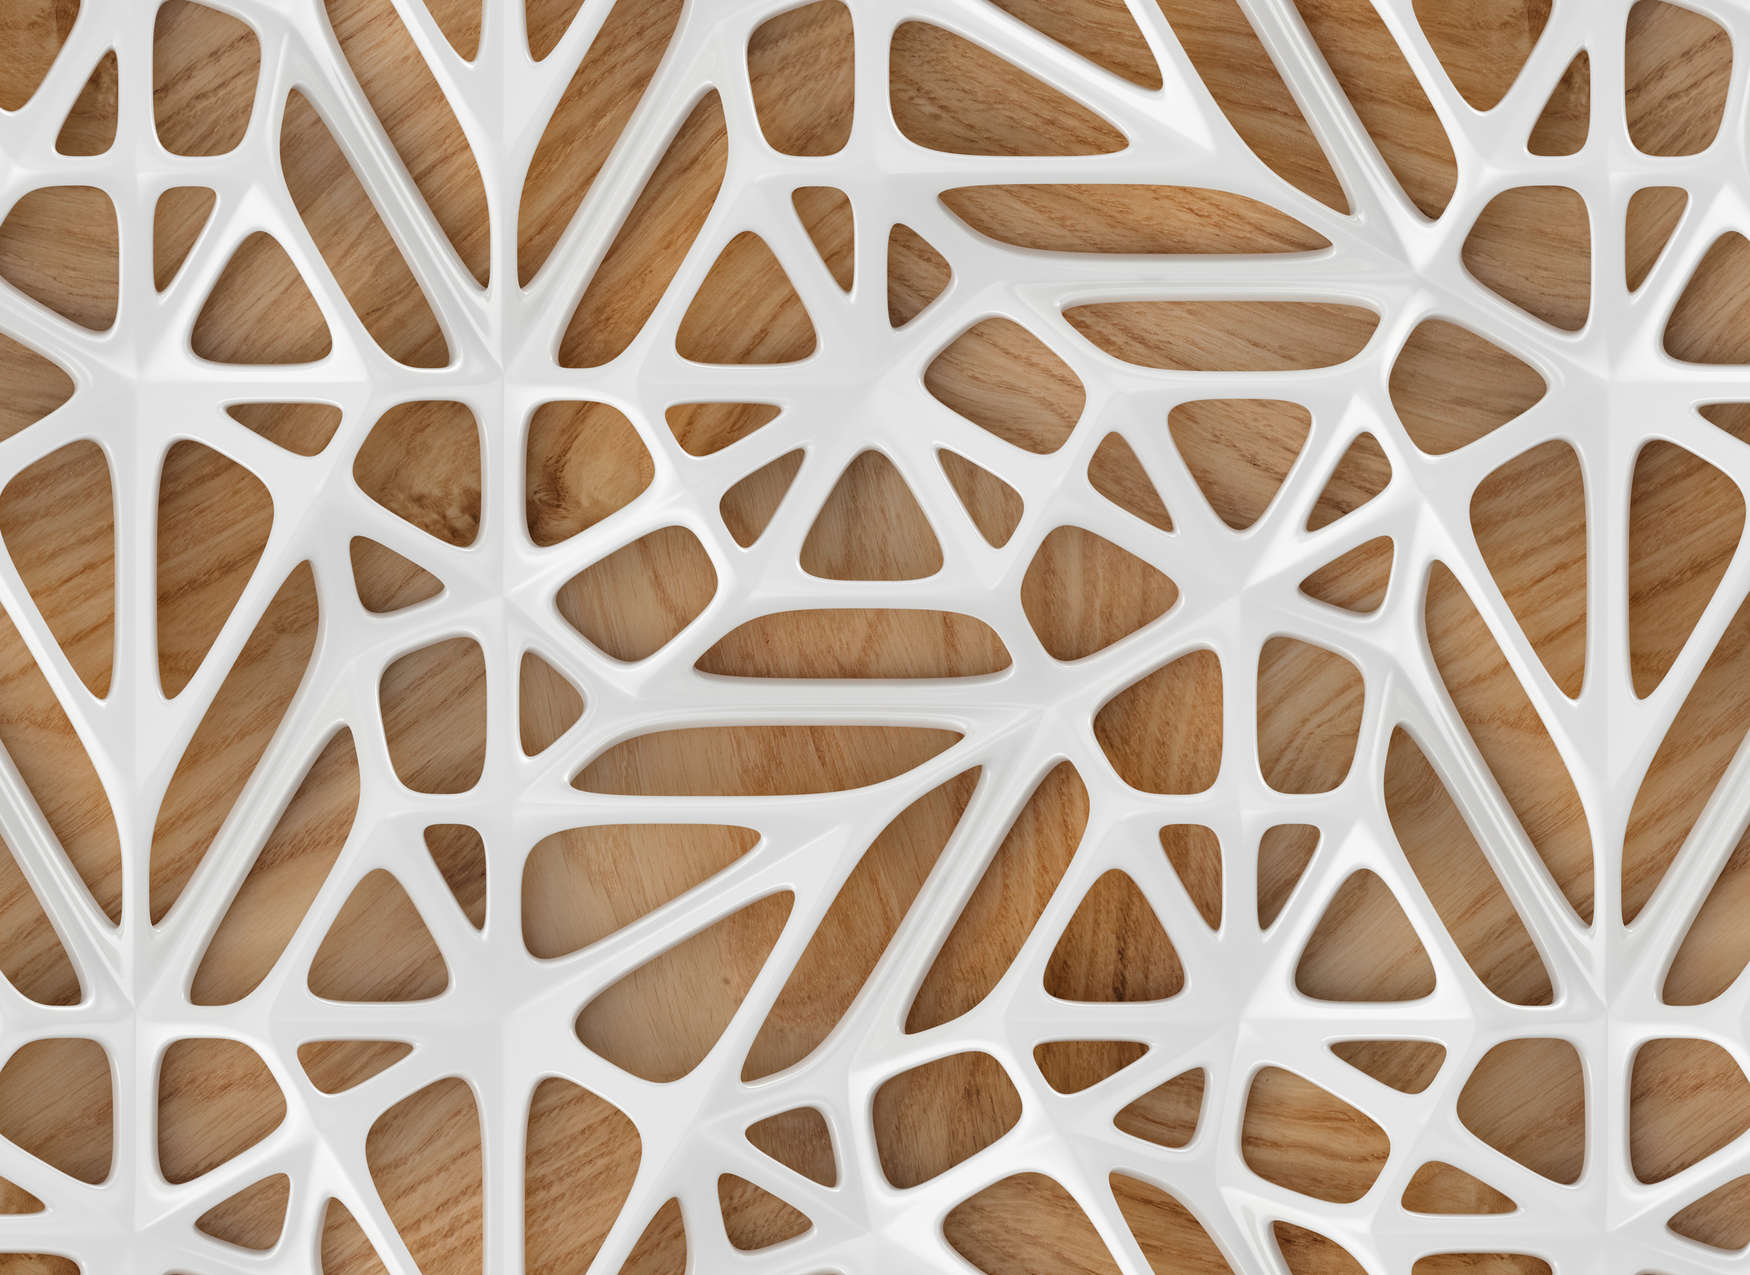             Wood effect wallpaper modern 3D design - white, brown
        